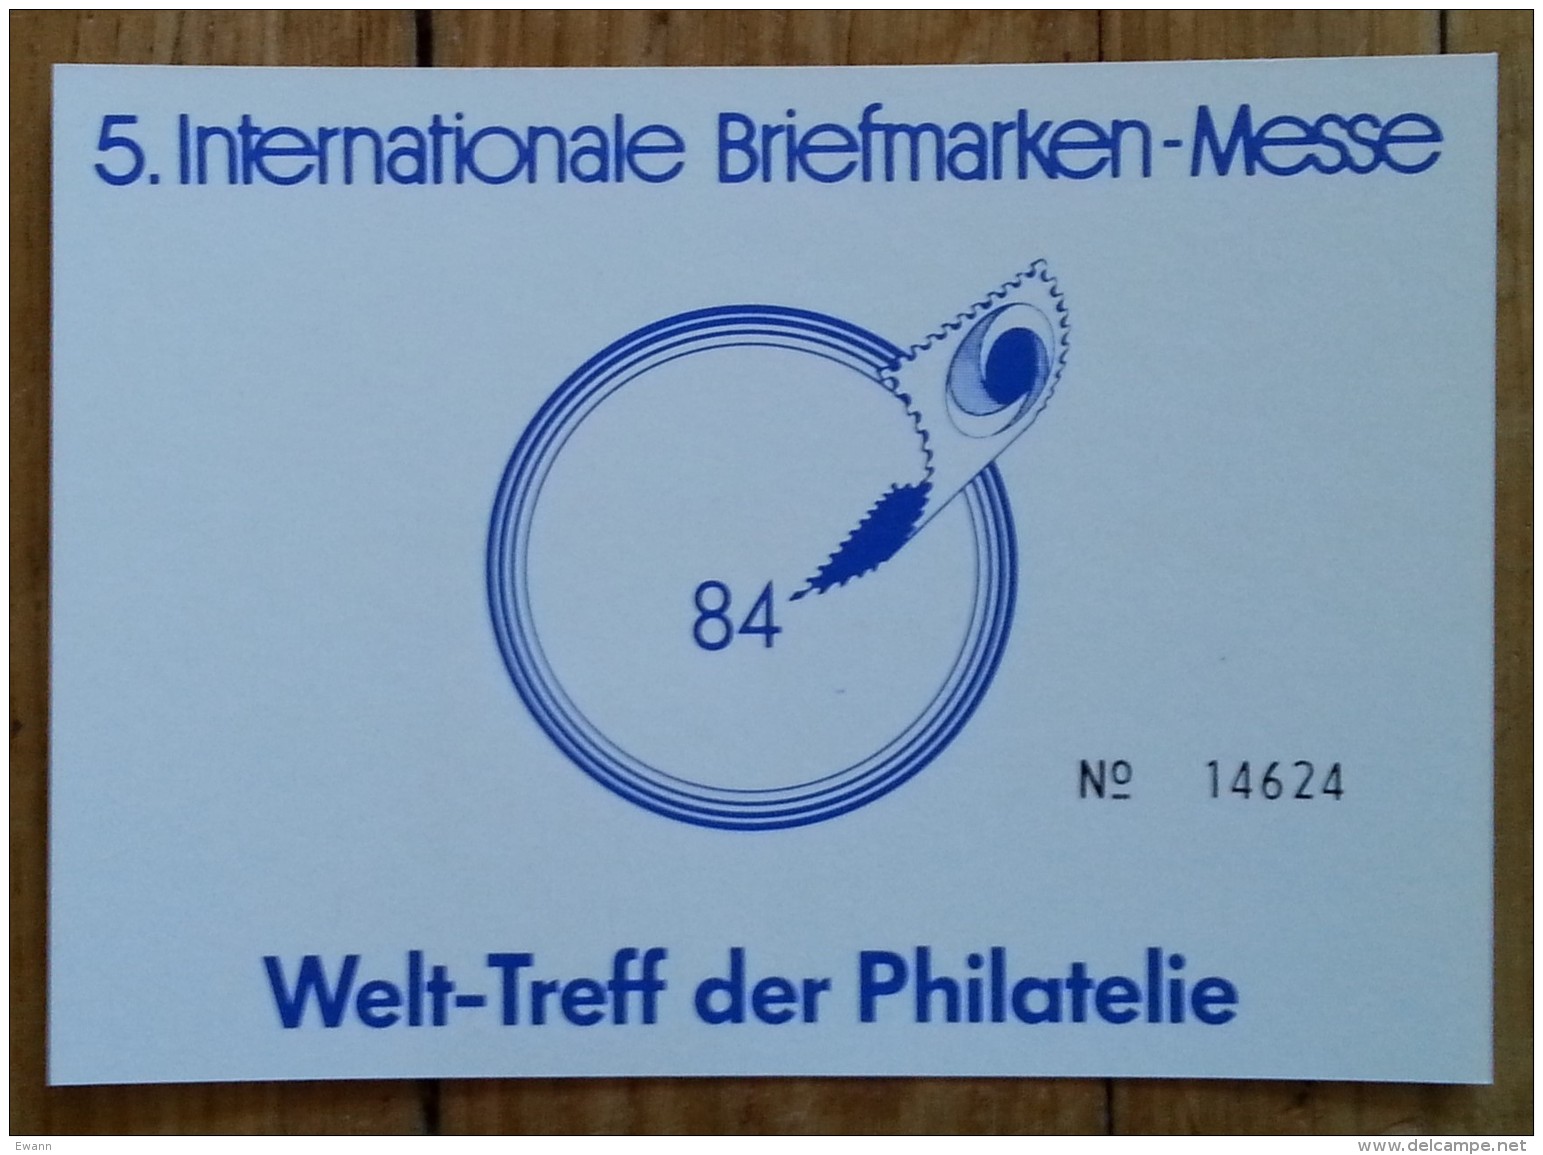 ISLANDE - Timbre De Distributeur - International Briefmarken Messe - ESSEN - 1984 - Frankeervignetten (Frama)